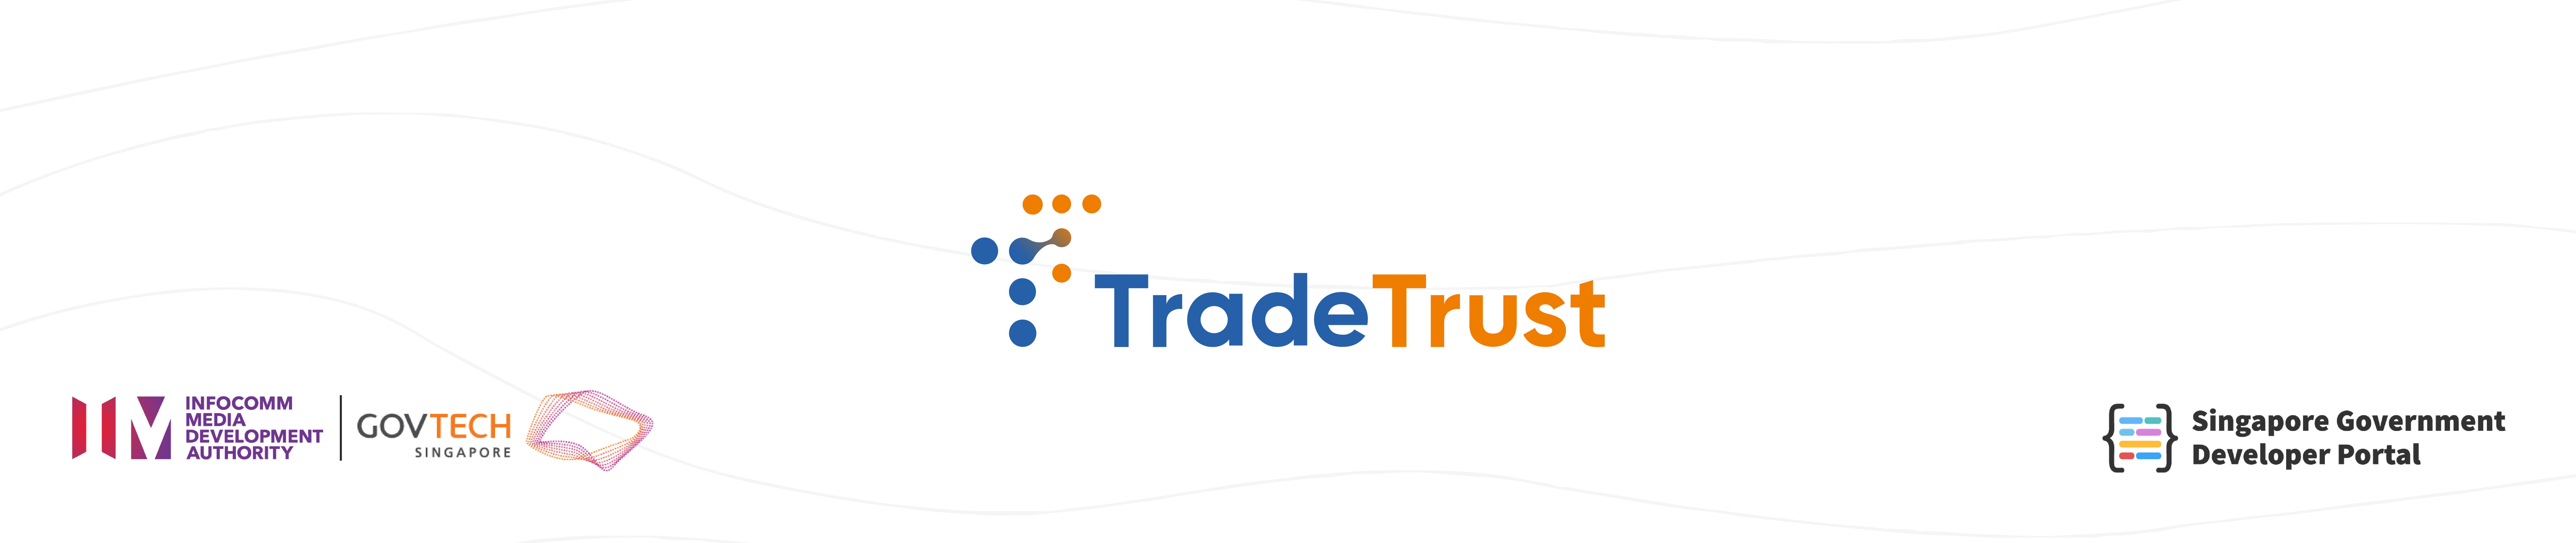 TradeTrust header banner